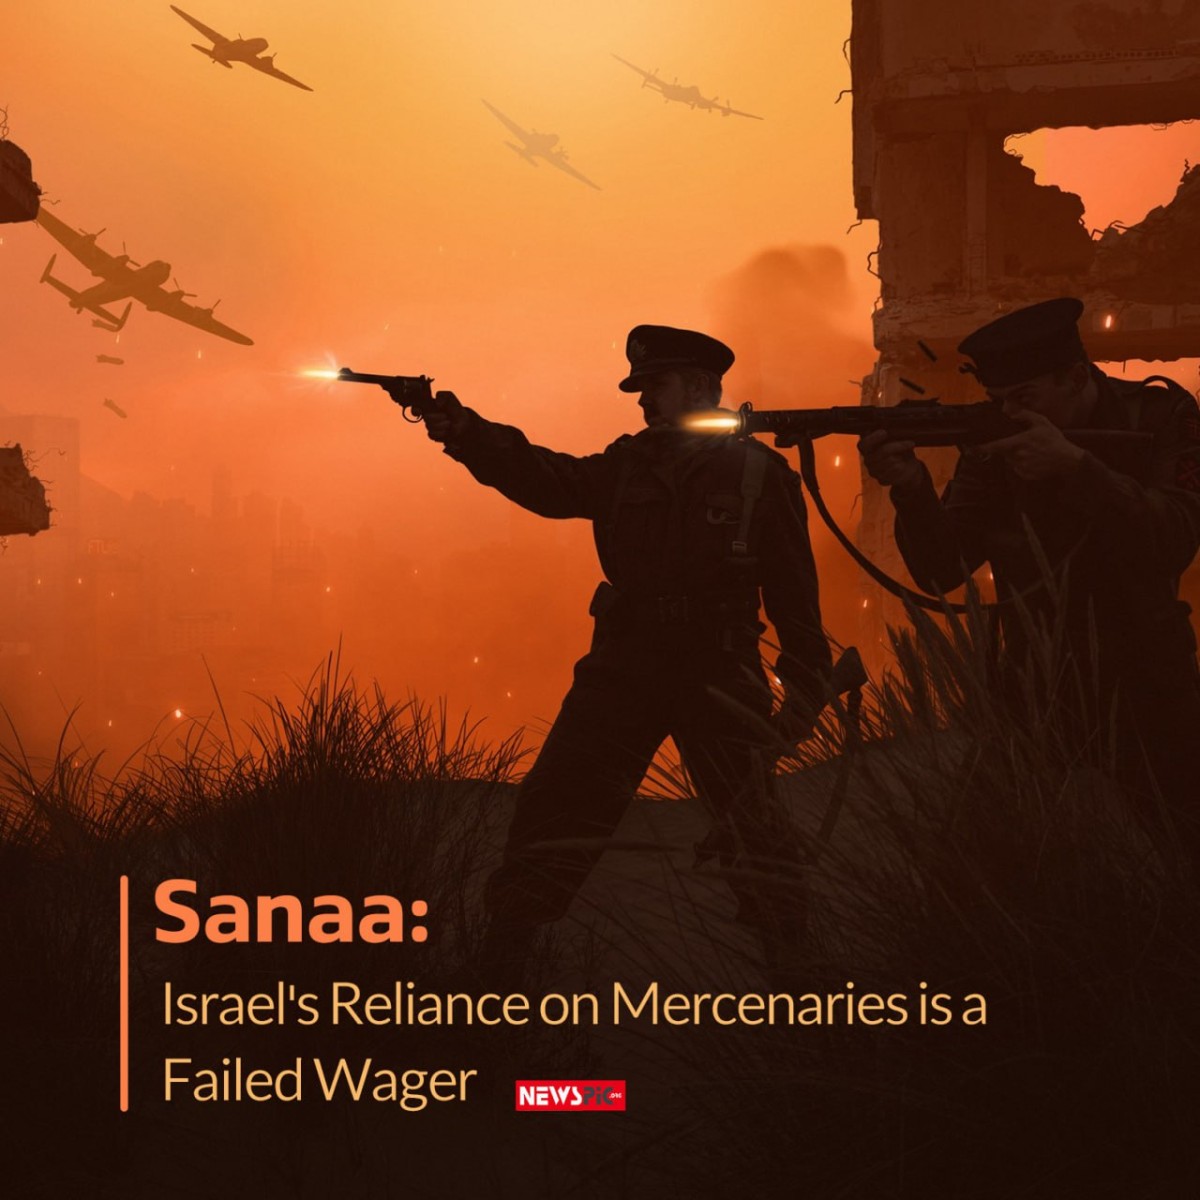 Sanaa: Israel's Reliance on Mercenaries is a Failed Wager